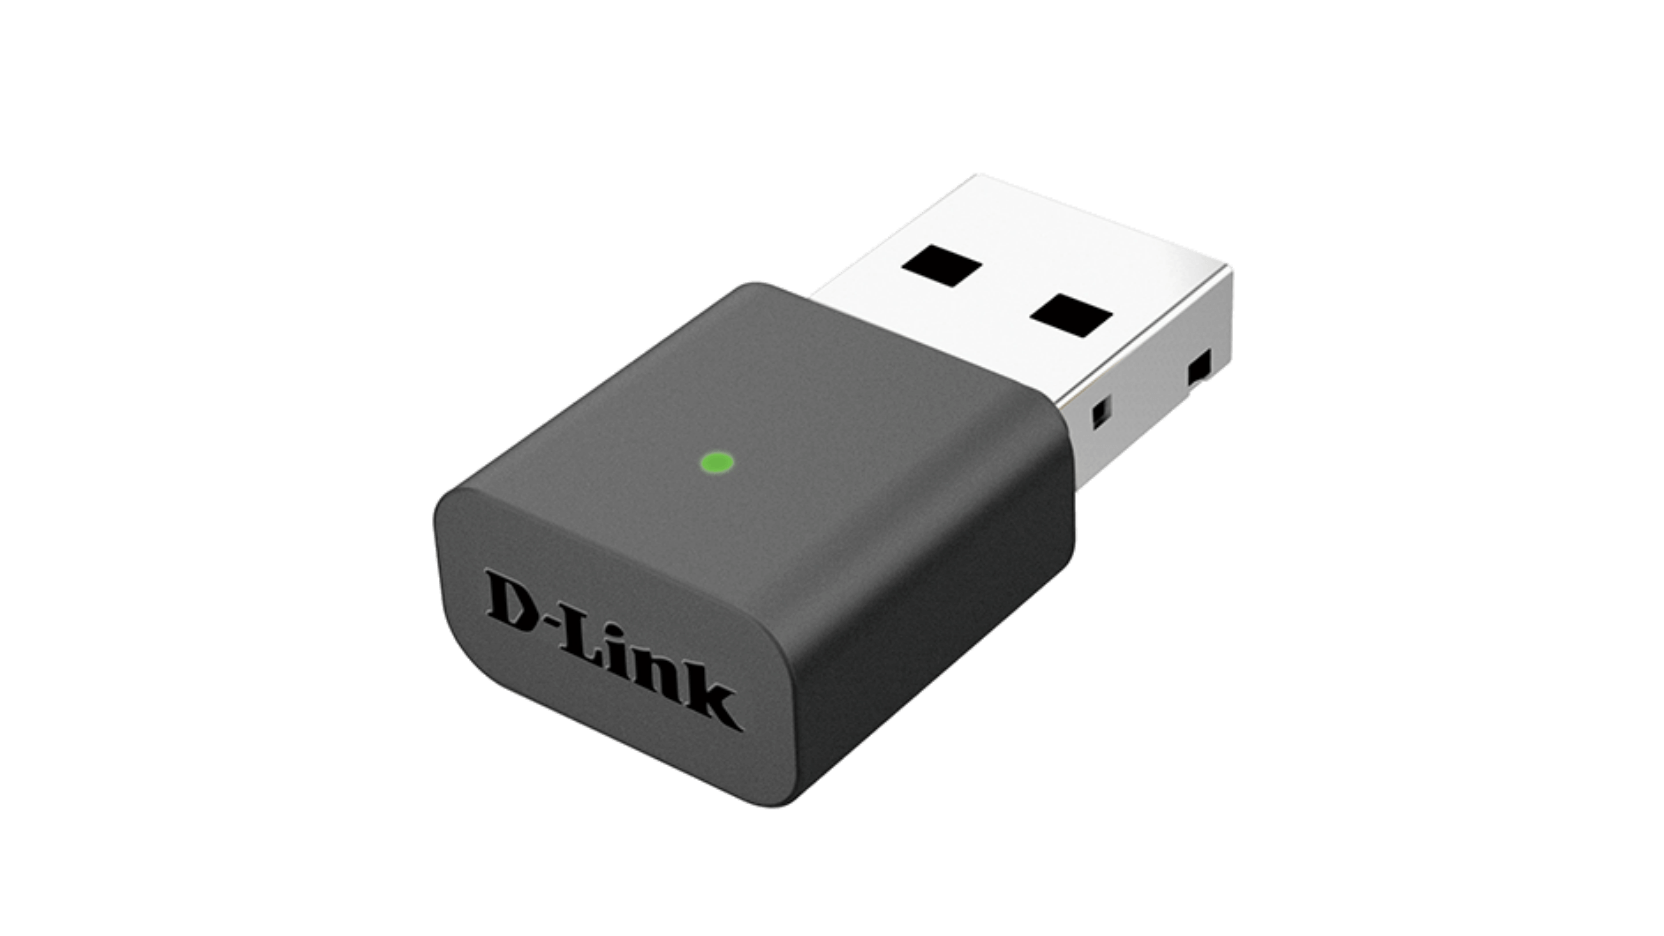 Wireless N 300 USB 2.0 nano Adapter (DWA-131/EU)